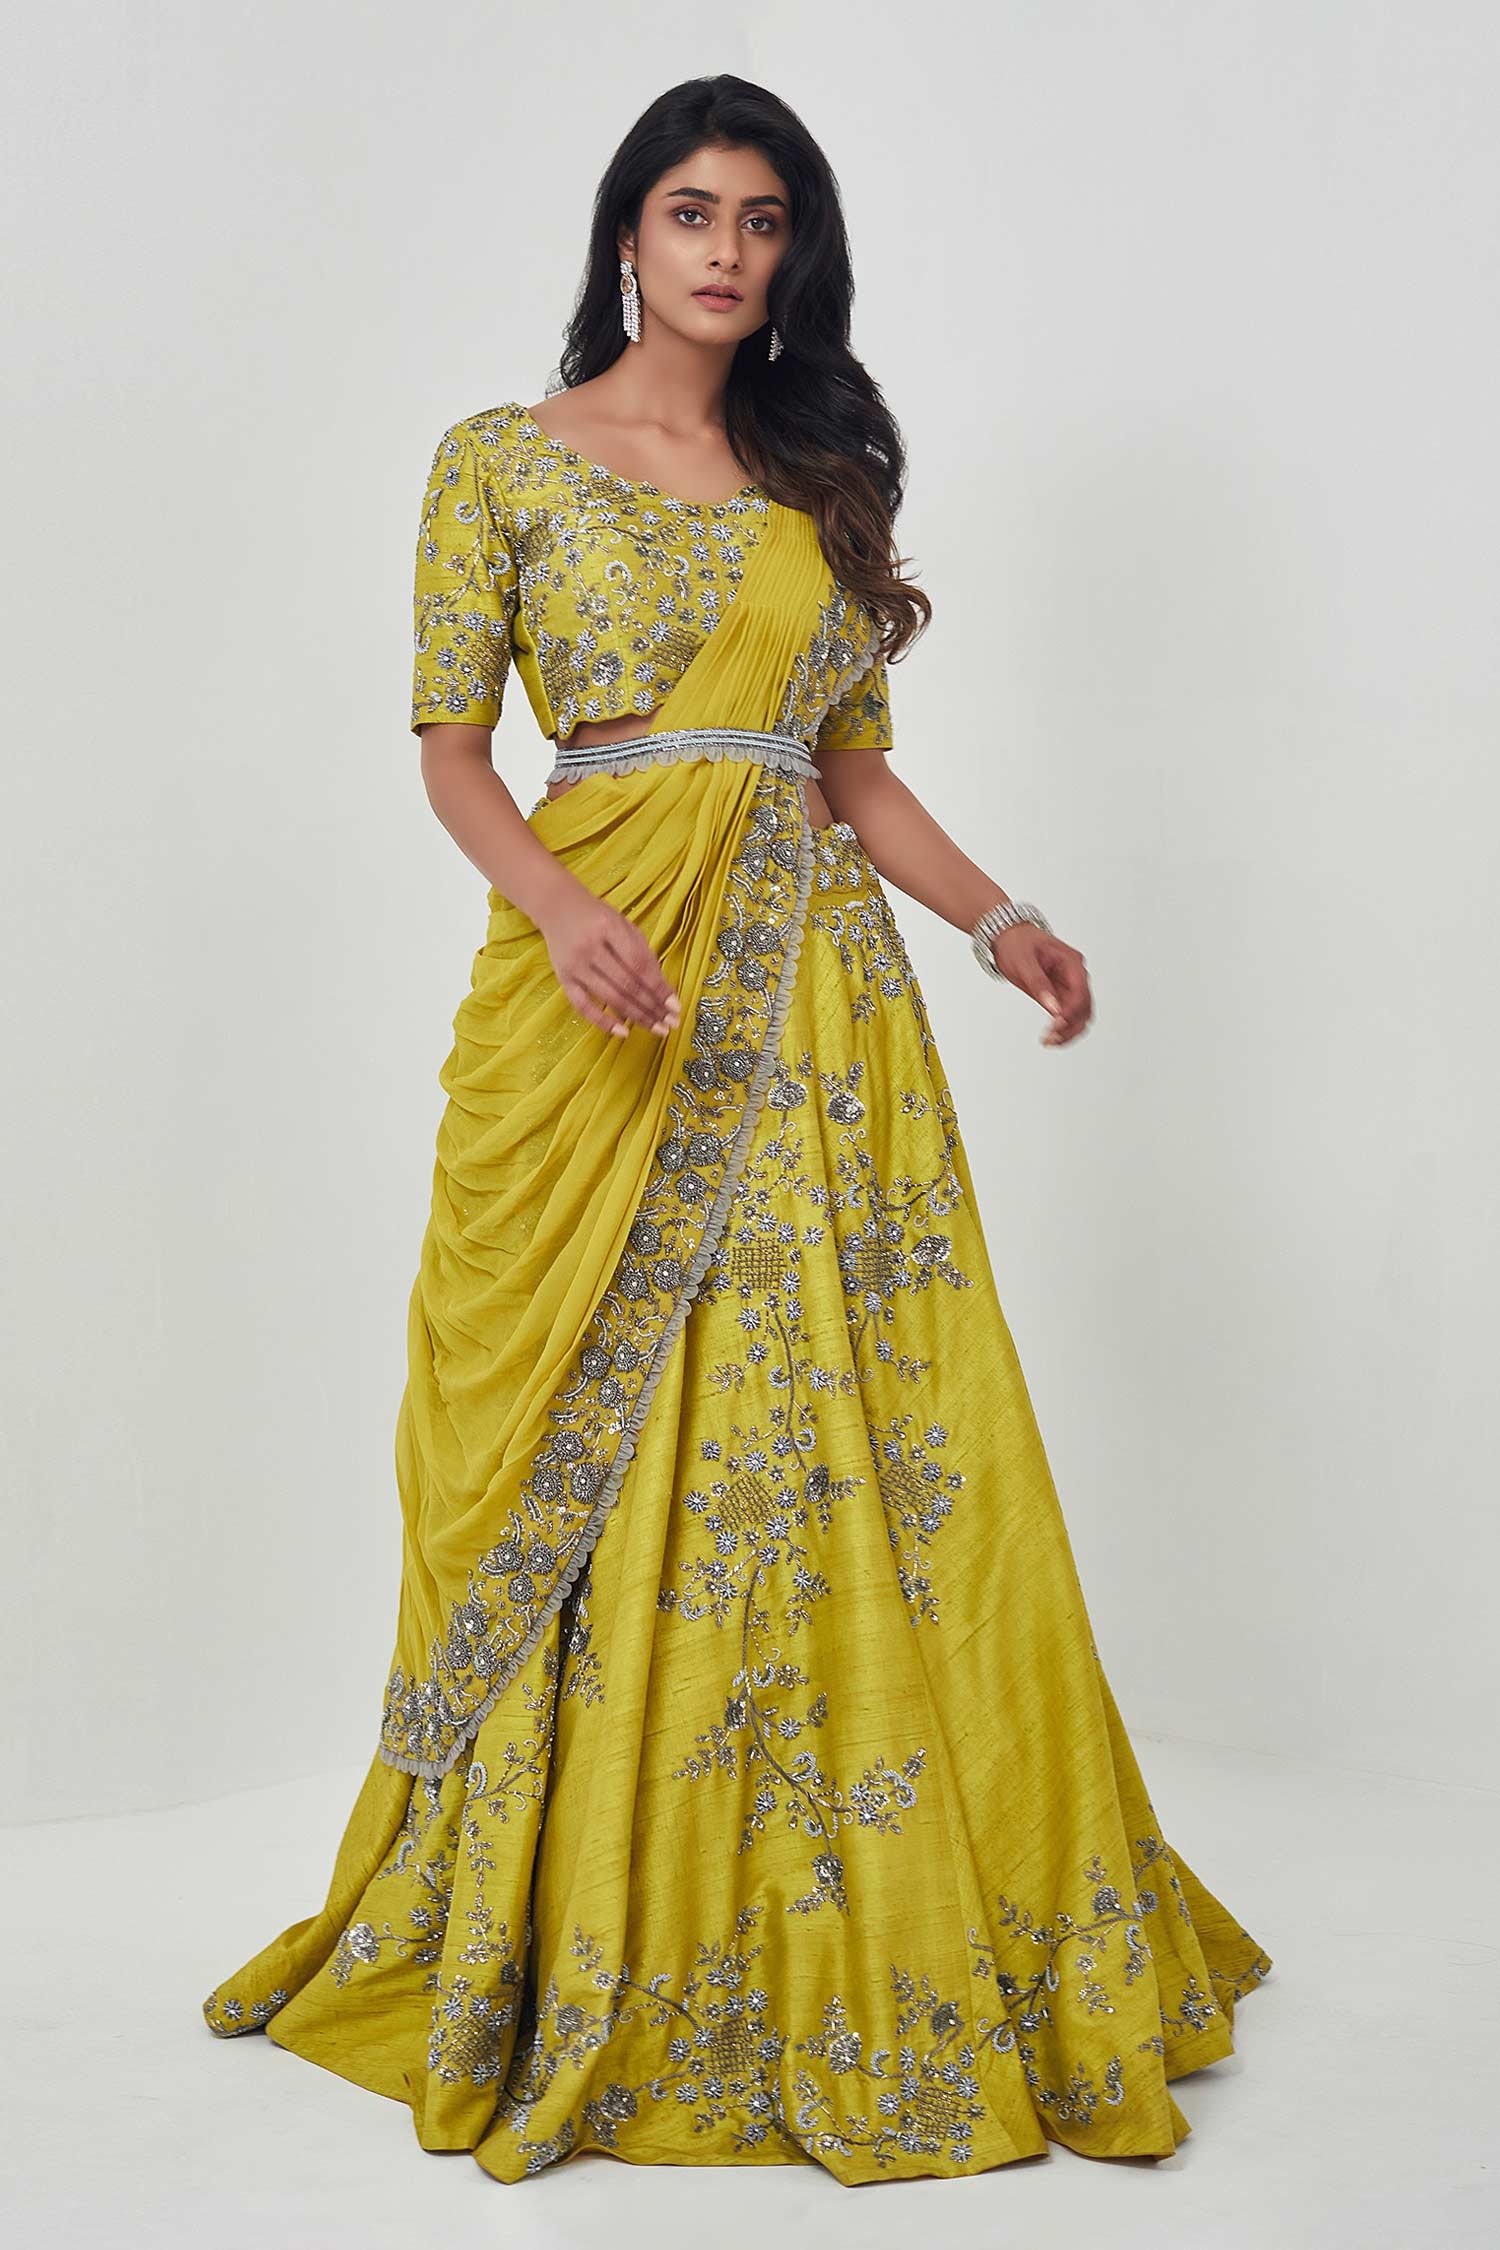 Yellow Net Lehenga Choli Set Designer Indian Party Wear Lengha Dress Sari  saree | eBay